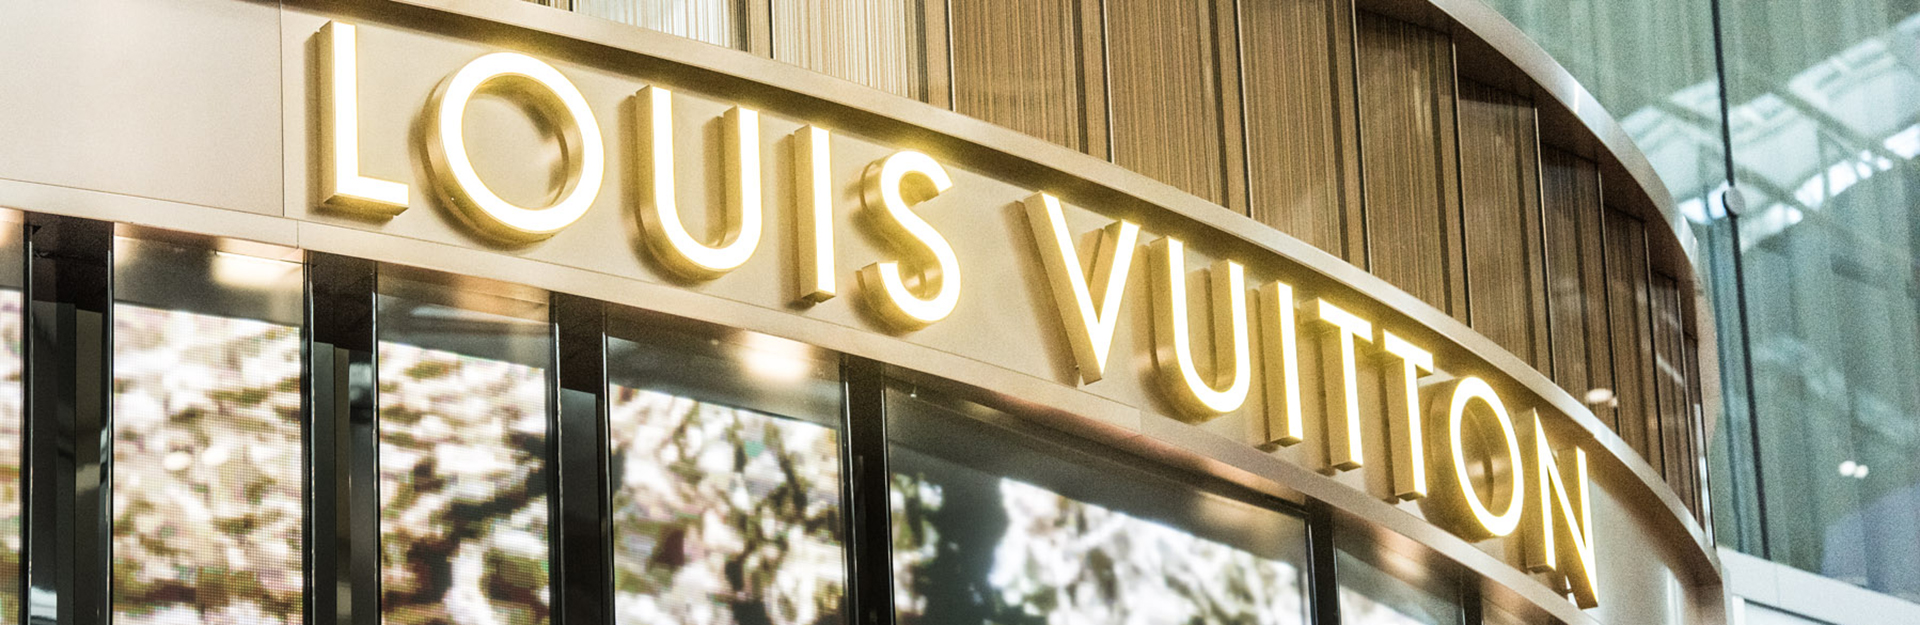 Louis Vuitton London Heathrow T4 store, United Kingdom